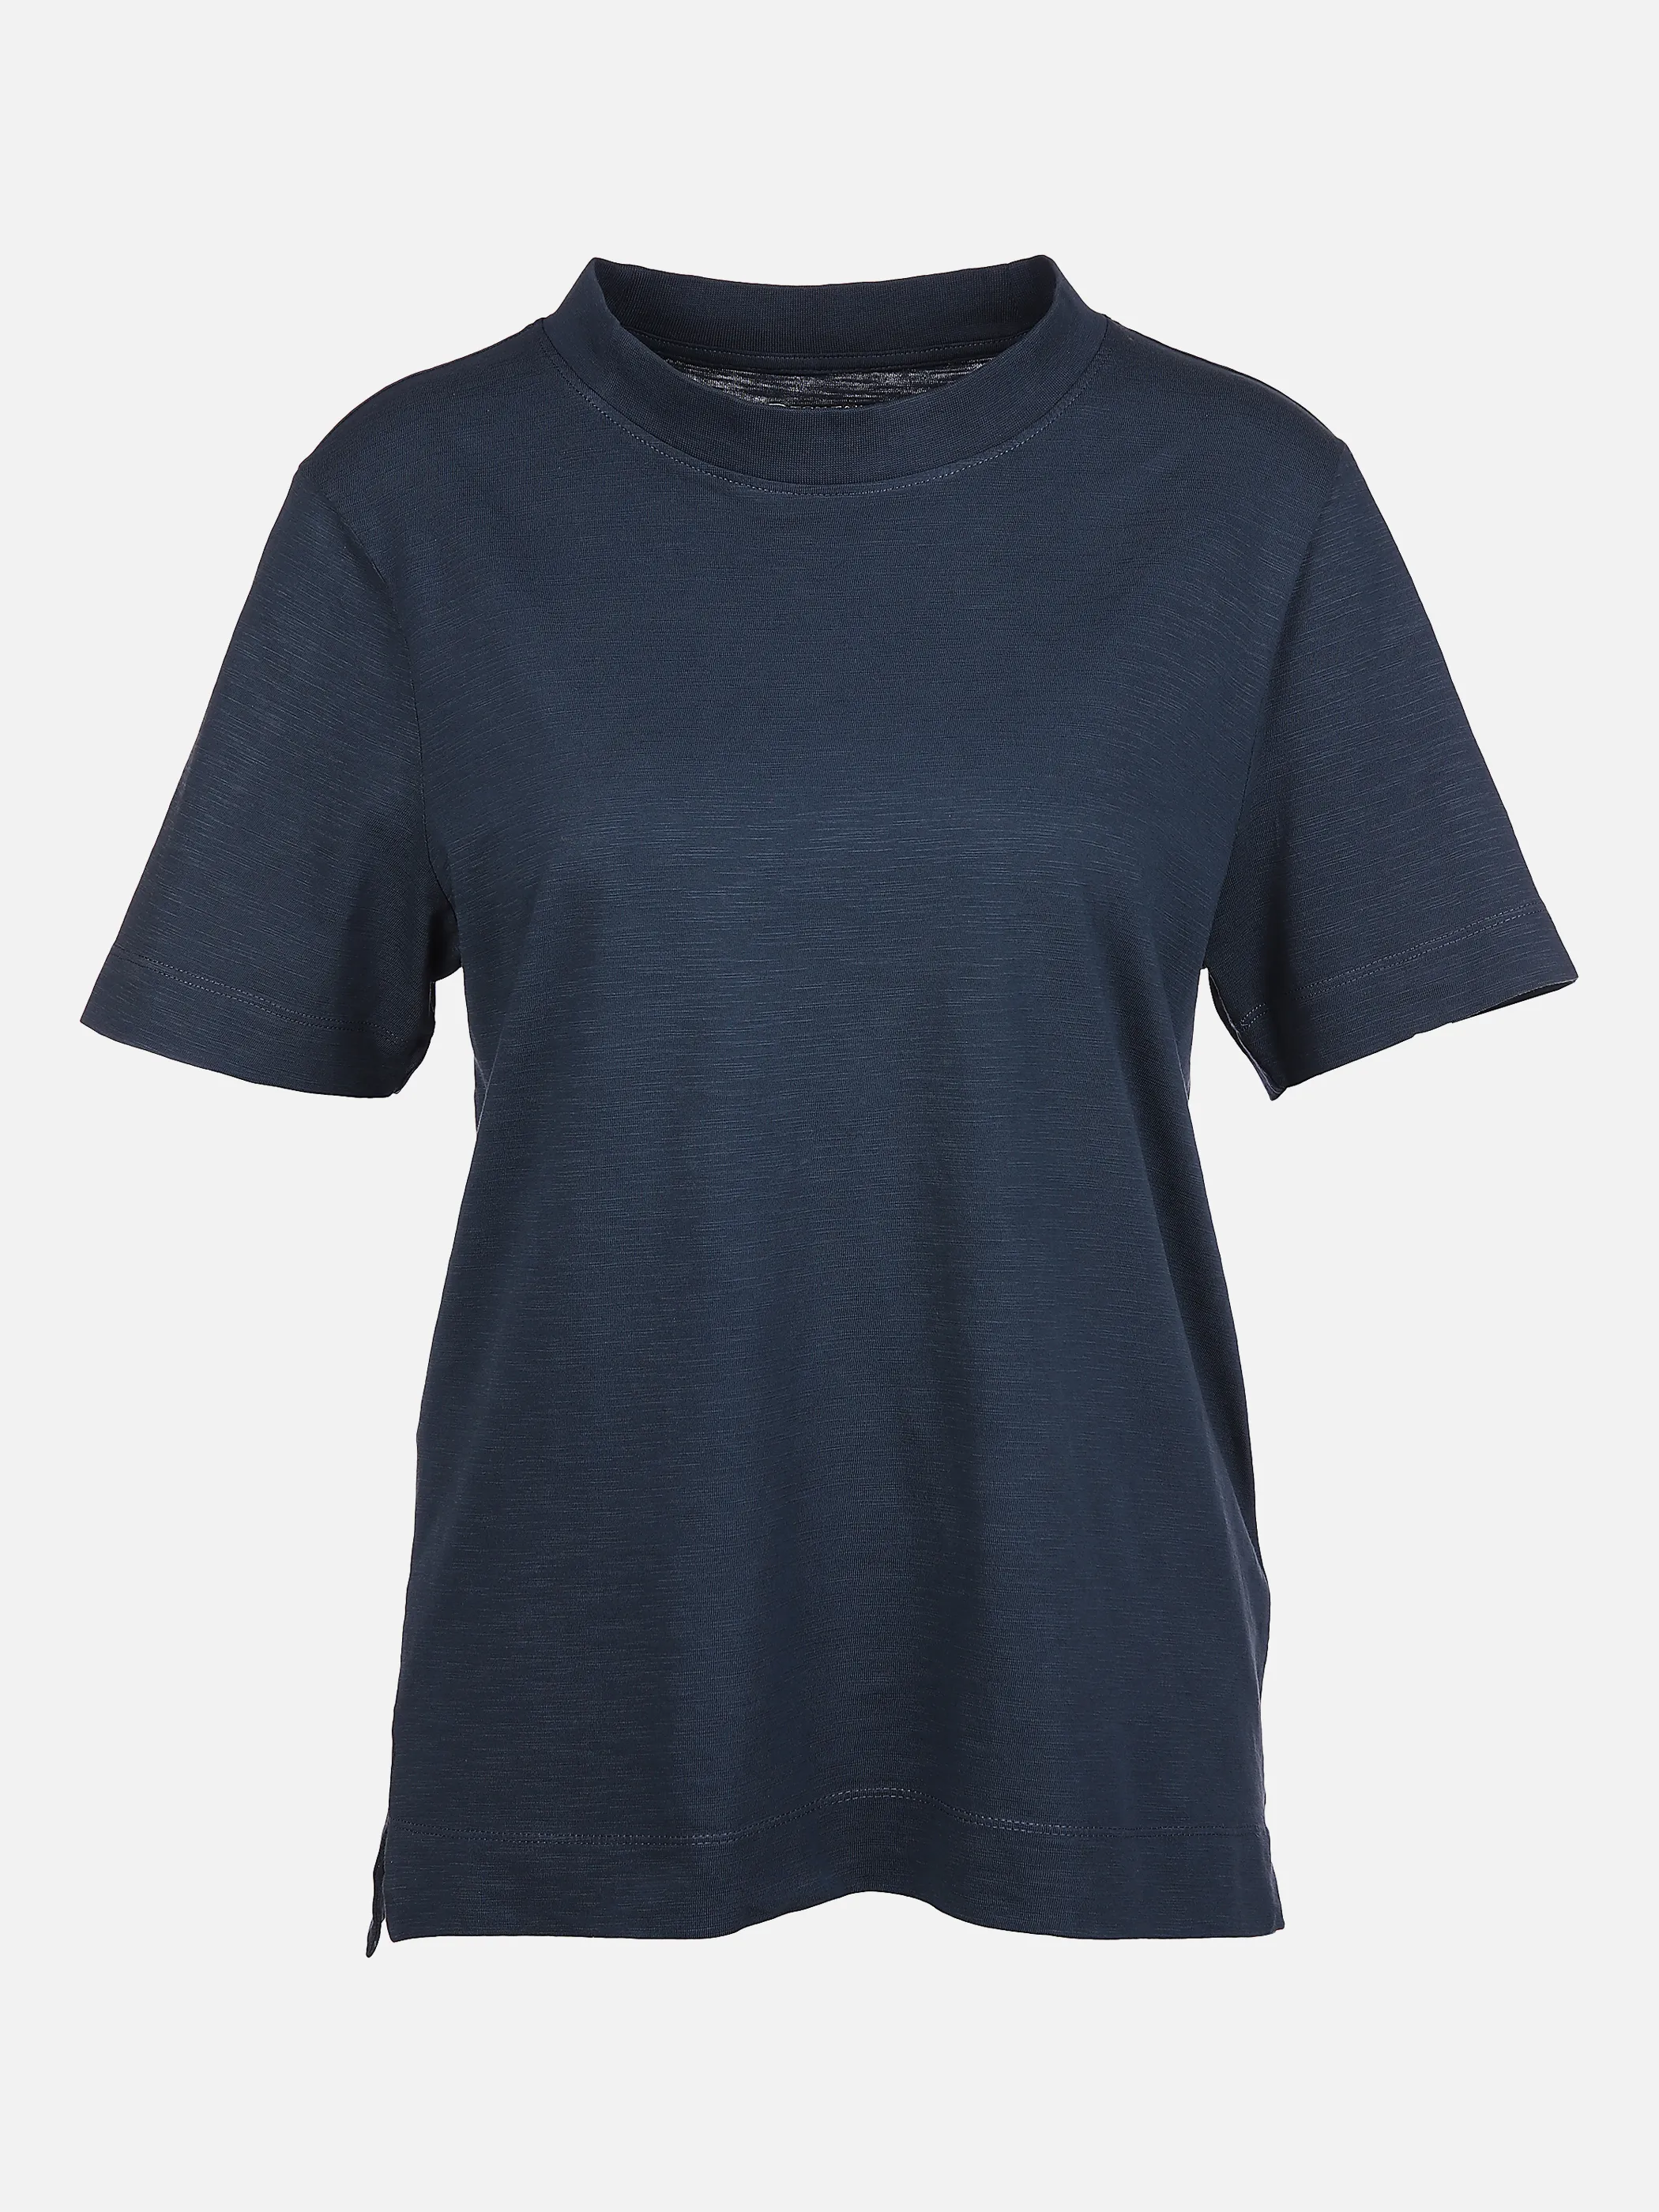 Tom Tailor 1031213 t-shirt natural dye Blau 865218 11758 1